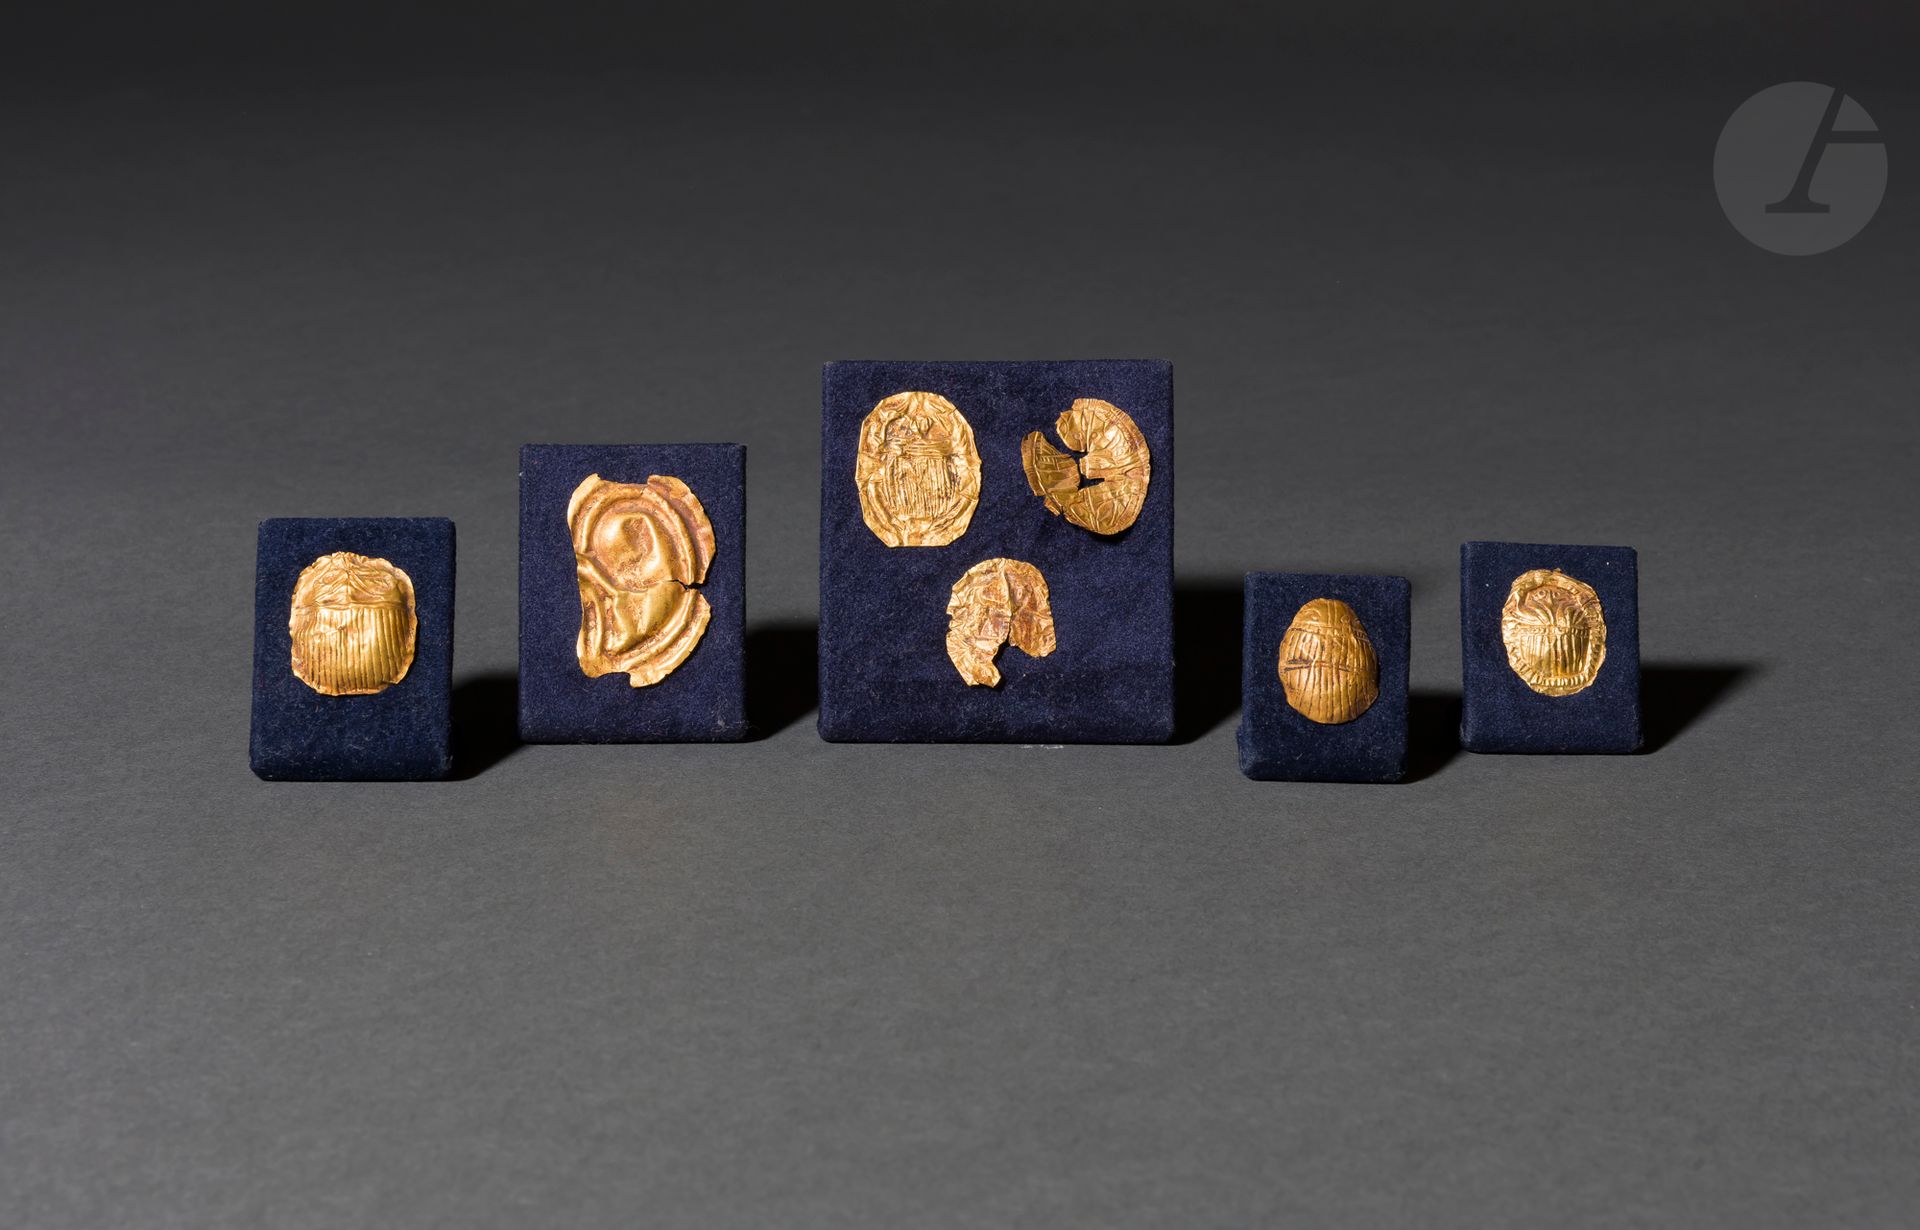 Null 木乃伊装饰品的七种元素，用回纹法制作的
描绘了刀疤和耳朵。
黄金。
埃及，晚期（公元前664-332年）。 
高度：2.7至4.4厘米

七个金色的埃&hellip;